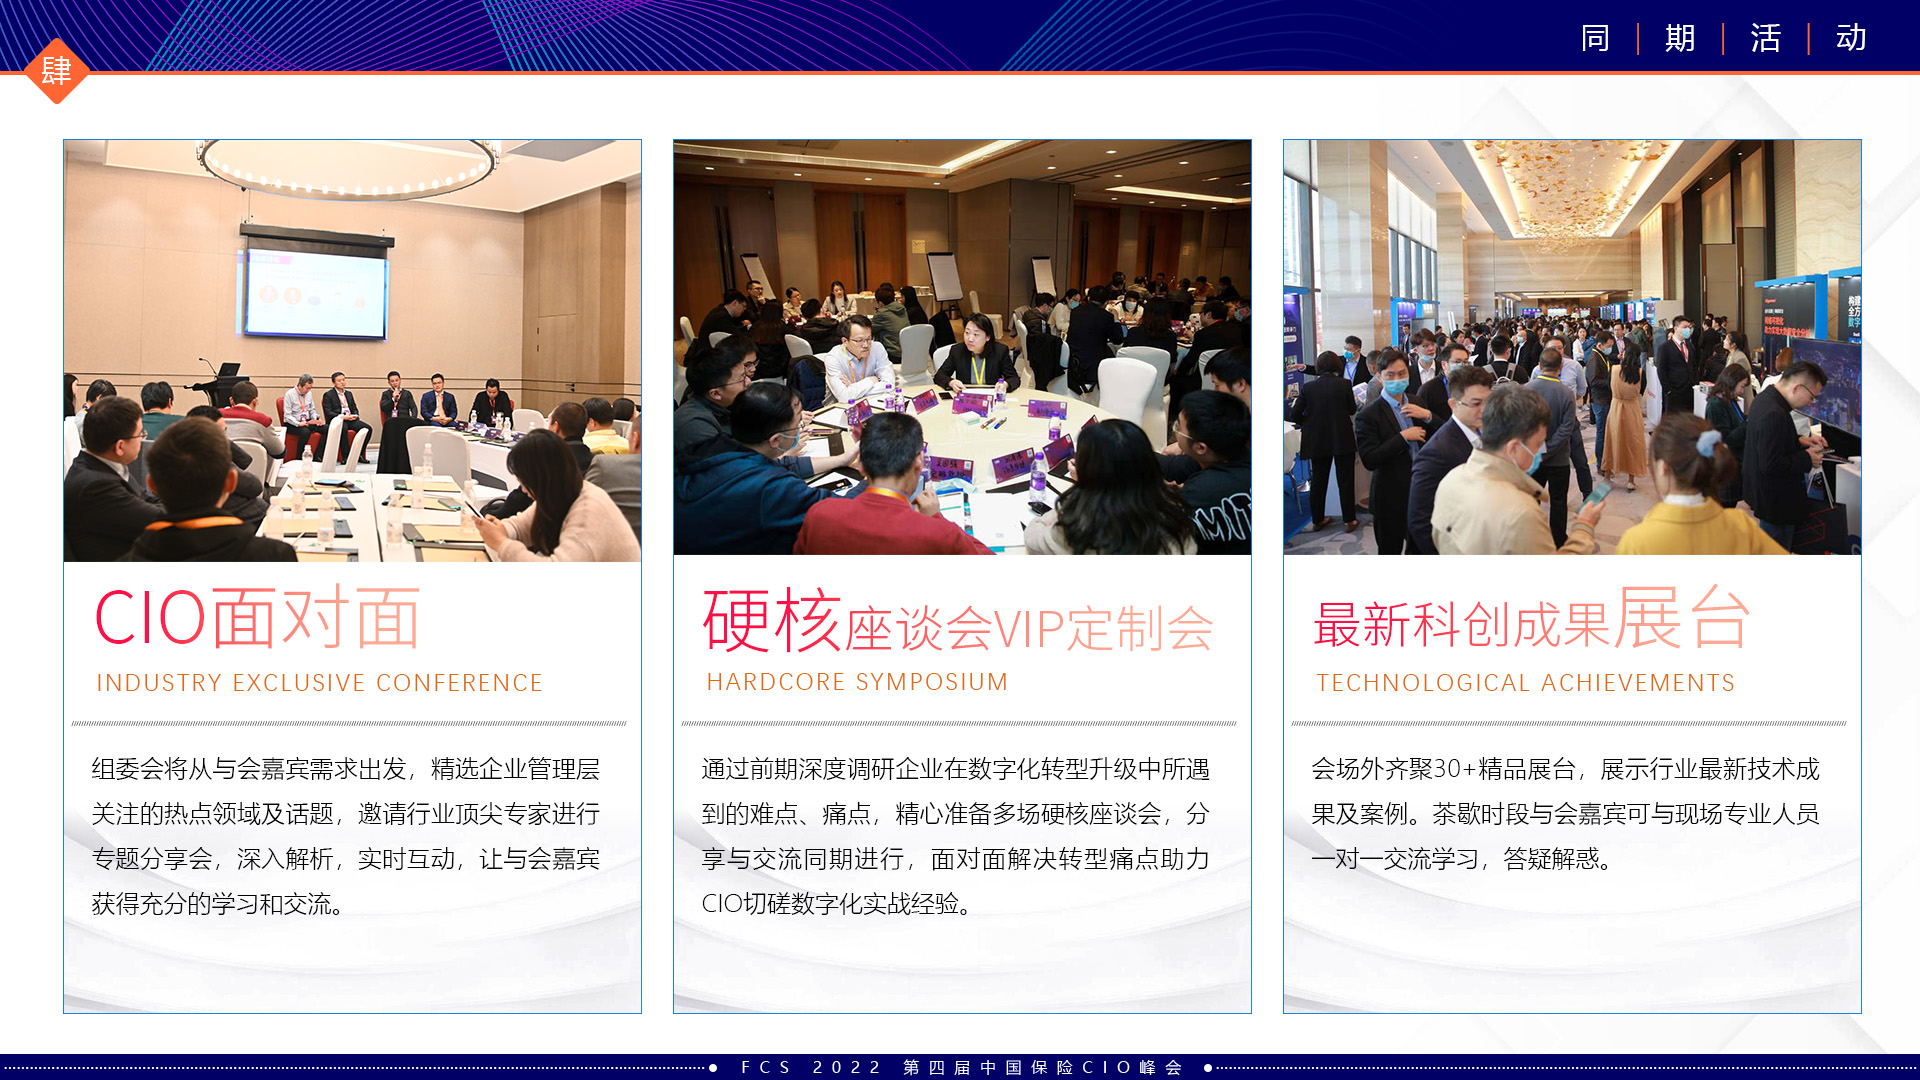 FCS 2022第四届中国保险CIO峰会